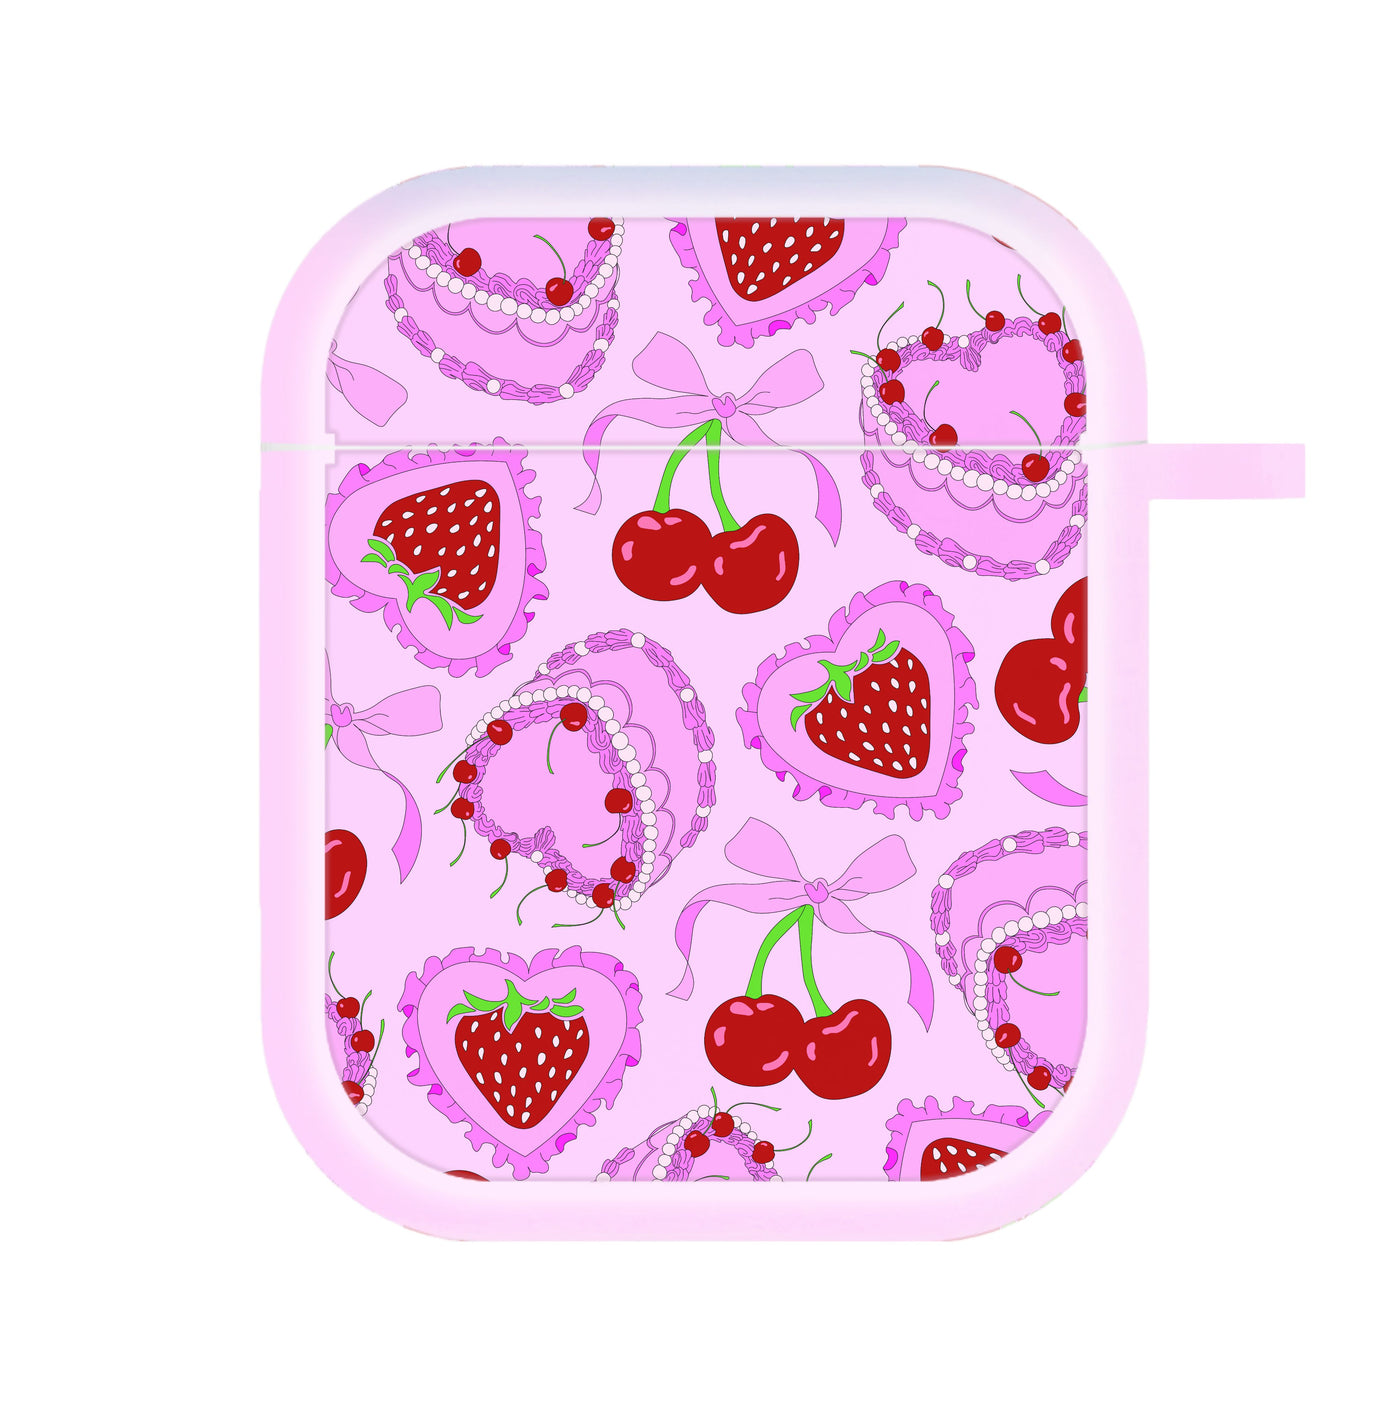 Cherries, Strawberries And Cake - Valentine's Day AirPods Case